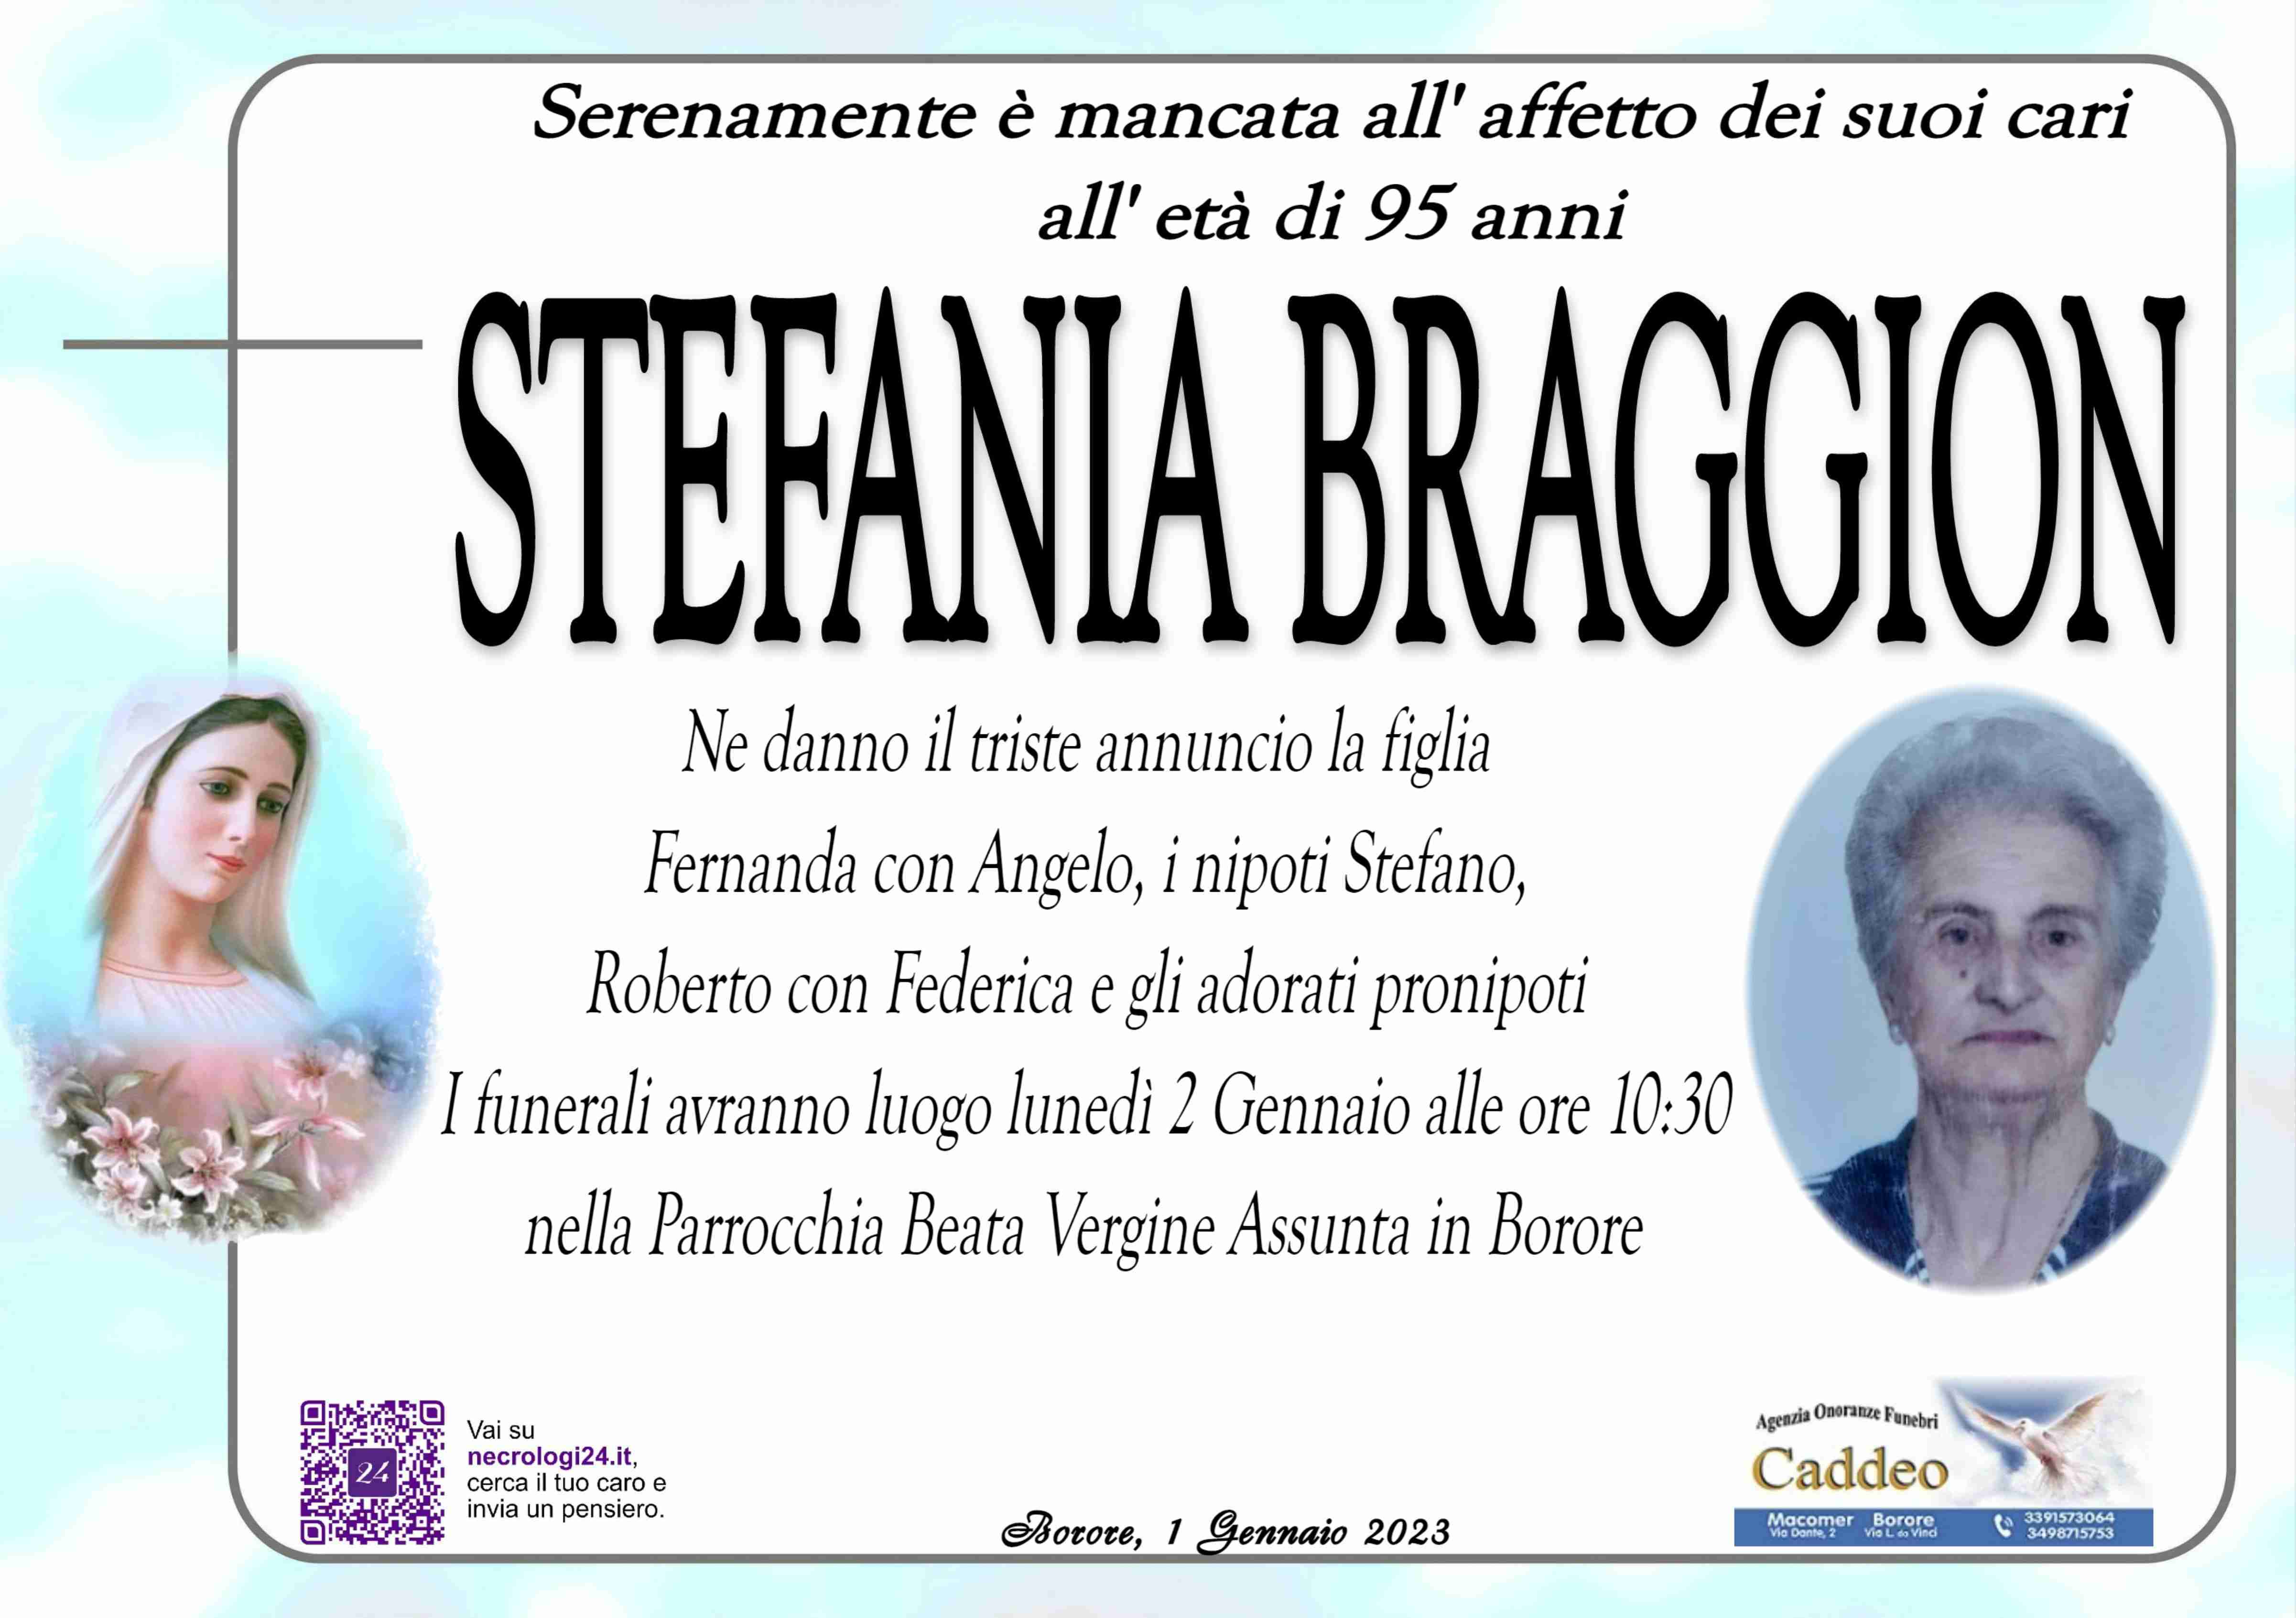 Stefania Braggion